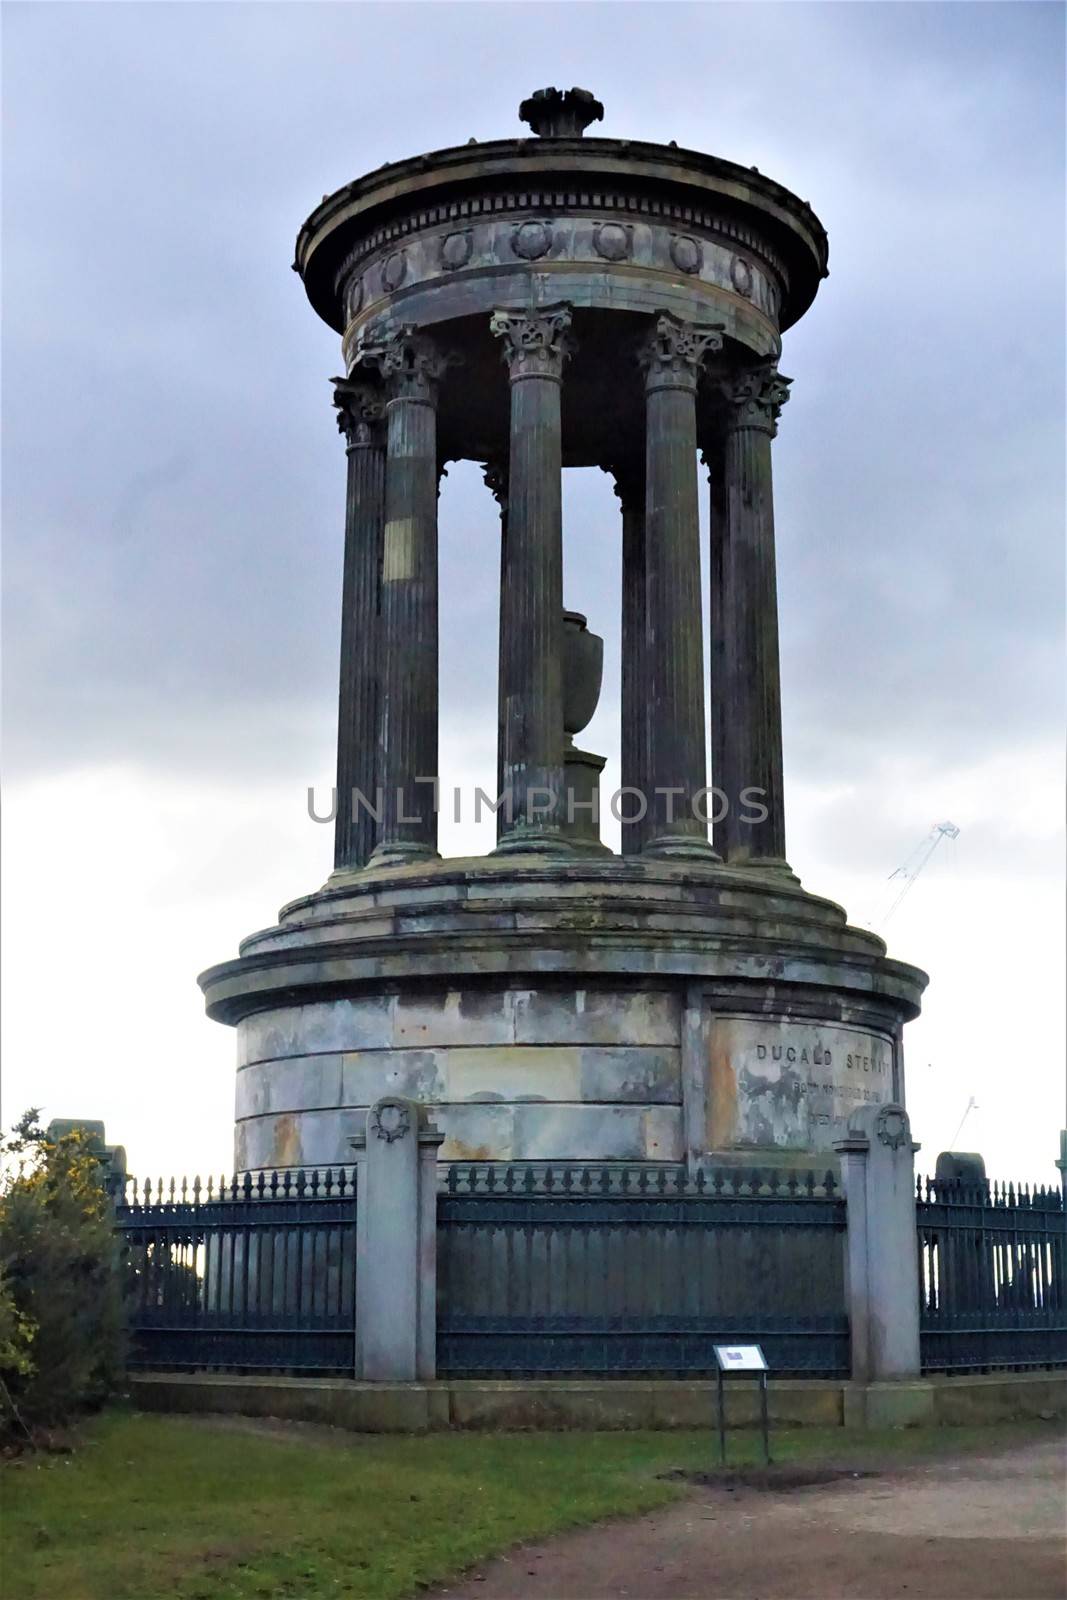 Dugald Stewart Monument on Calton Hill, Edinburgh Scotland